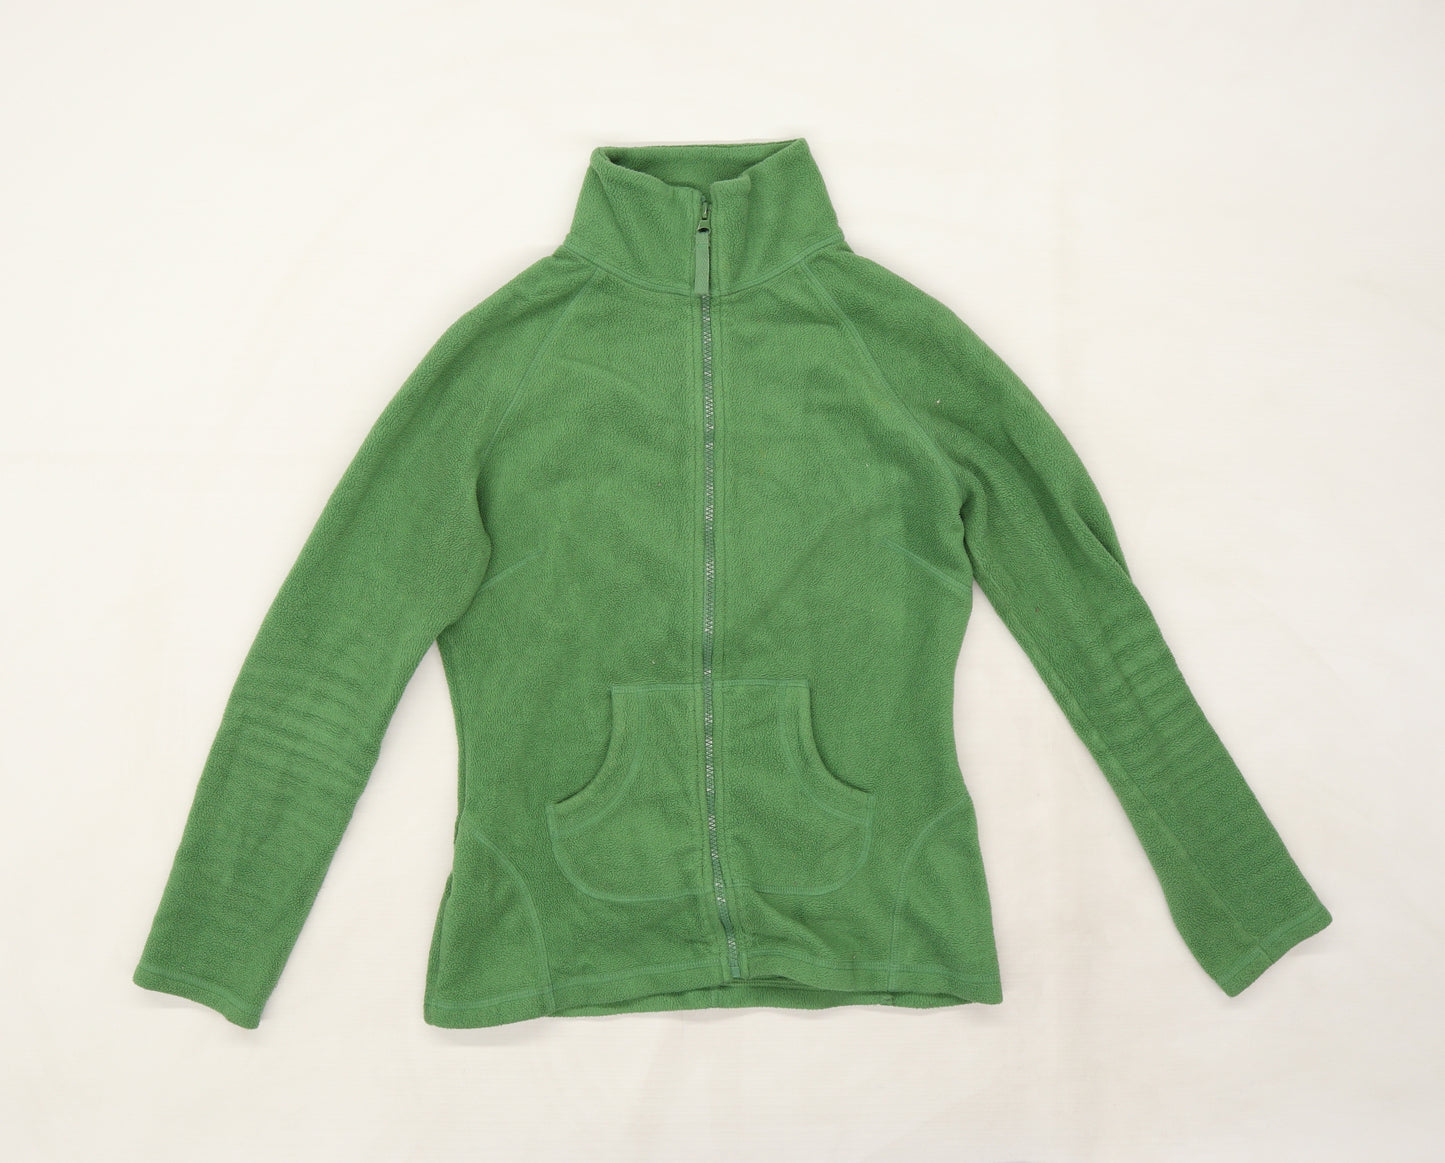 PreWorn Womens Green  Fleece Jacket  Size 12